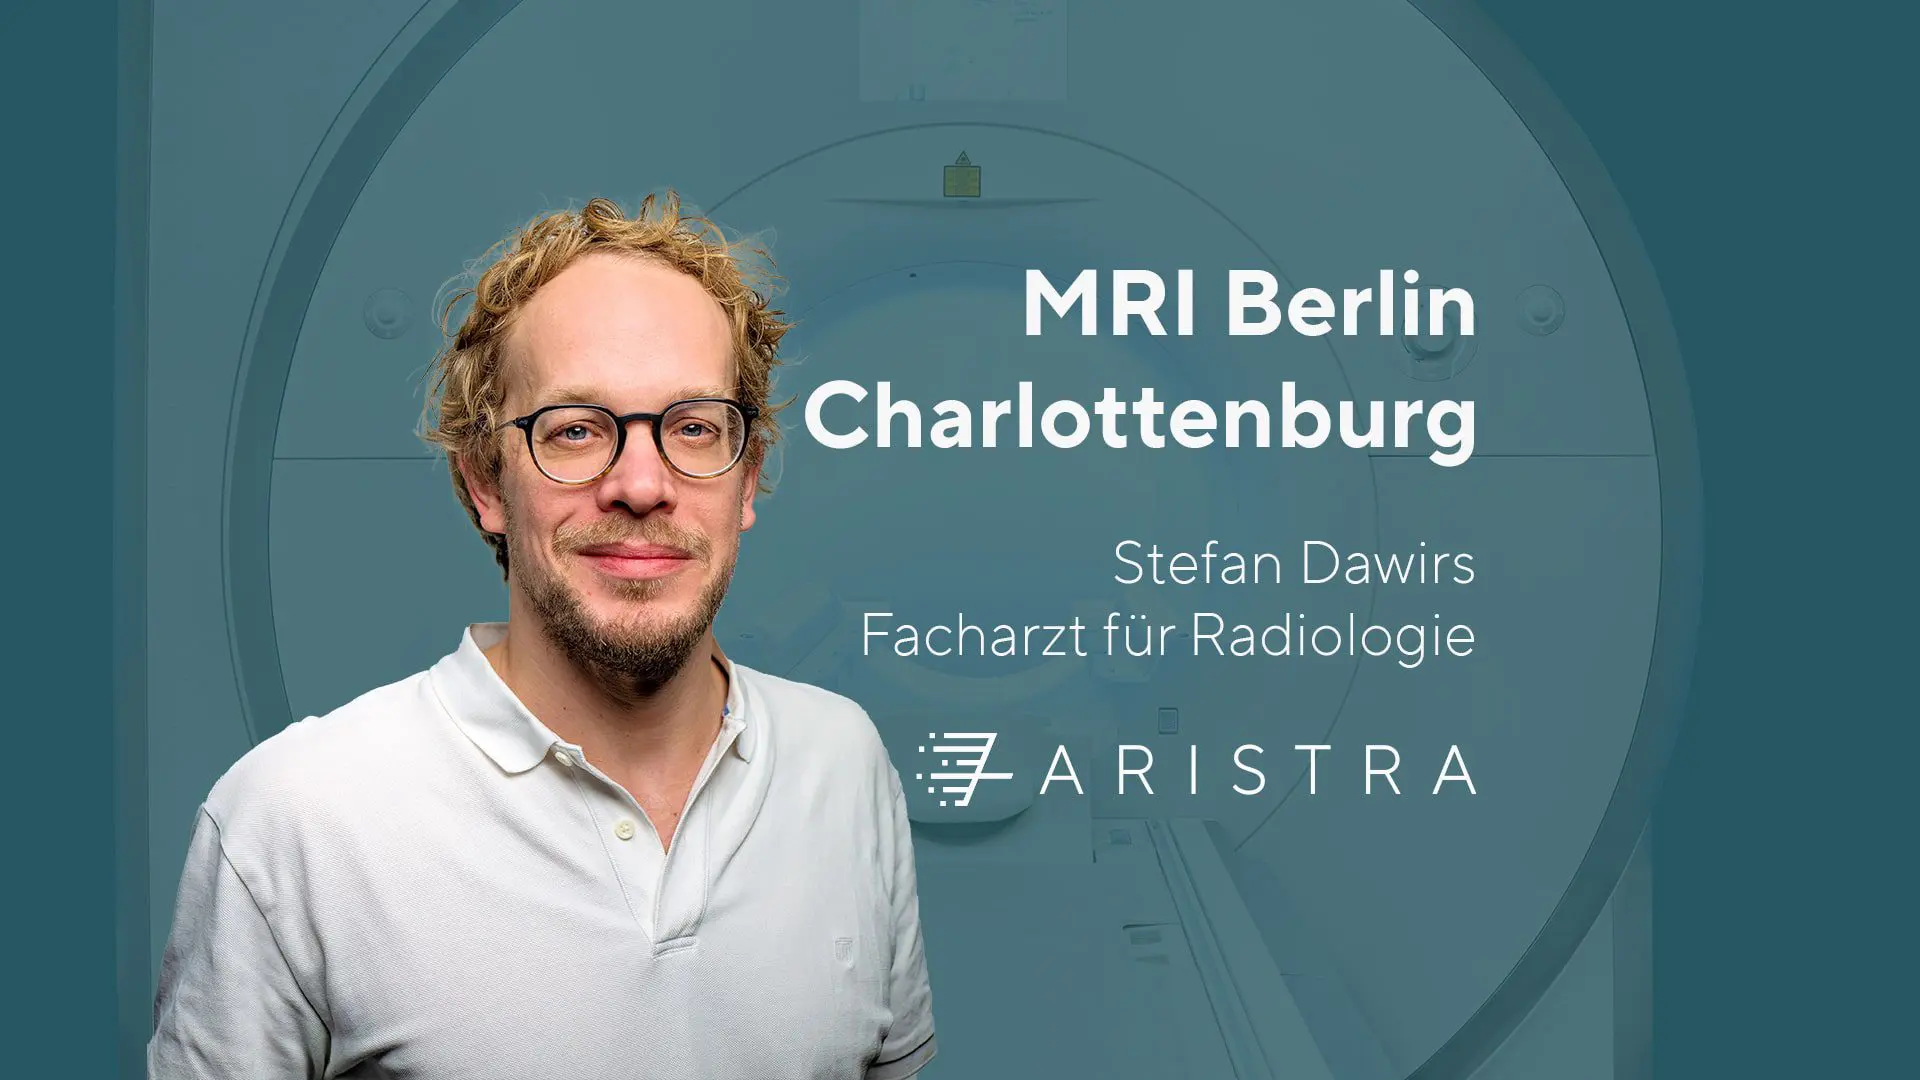 ARISTRA Berlin-Charlottenburg, Stefan Dawirs